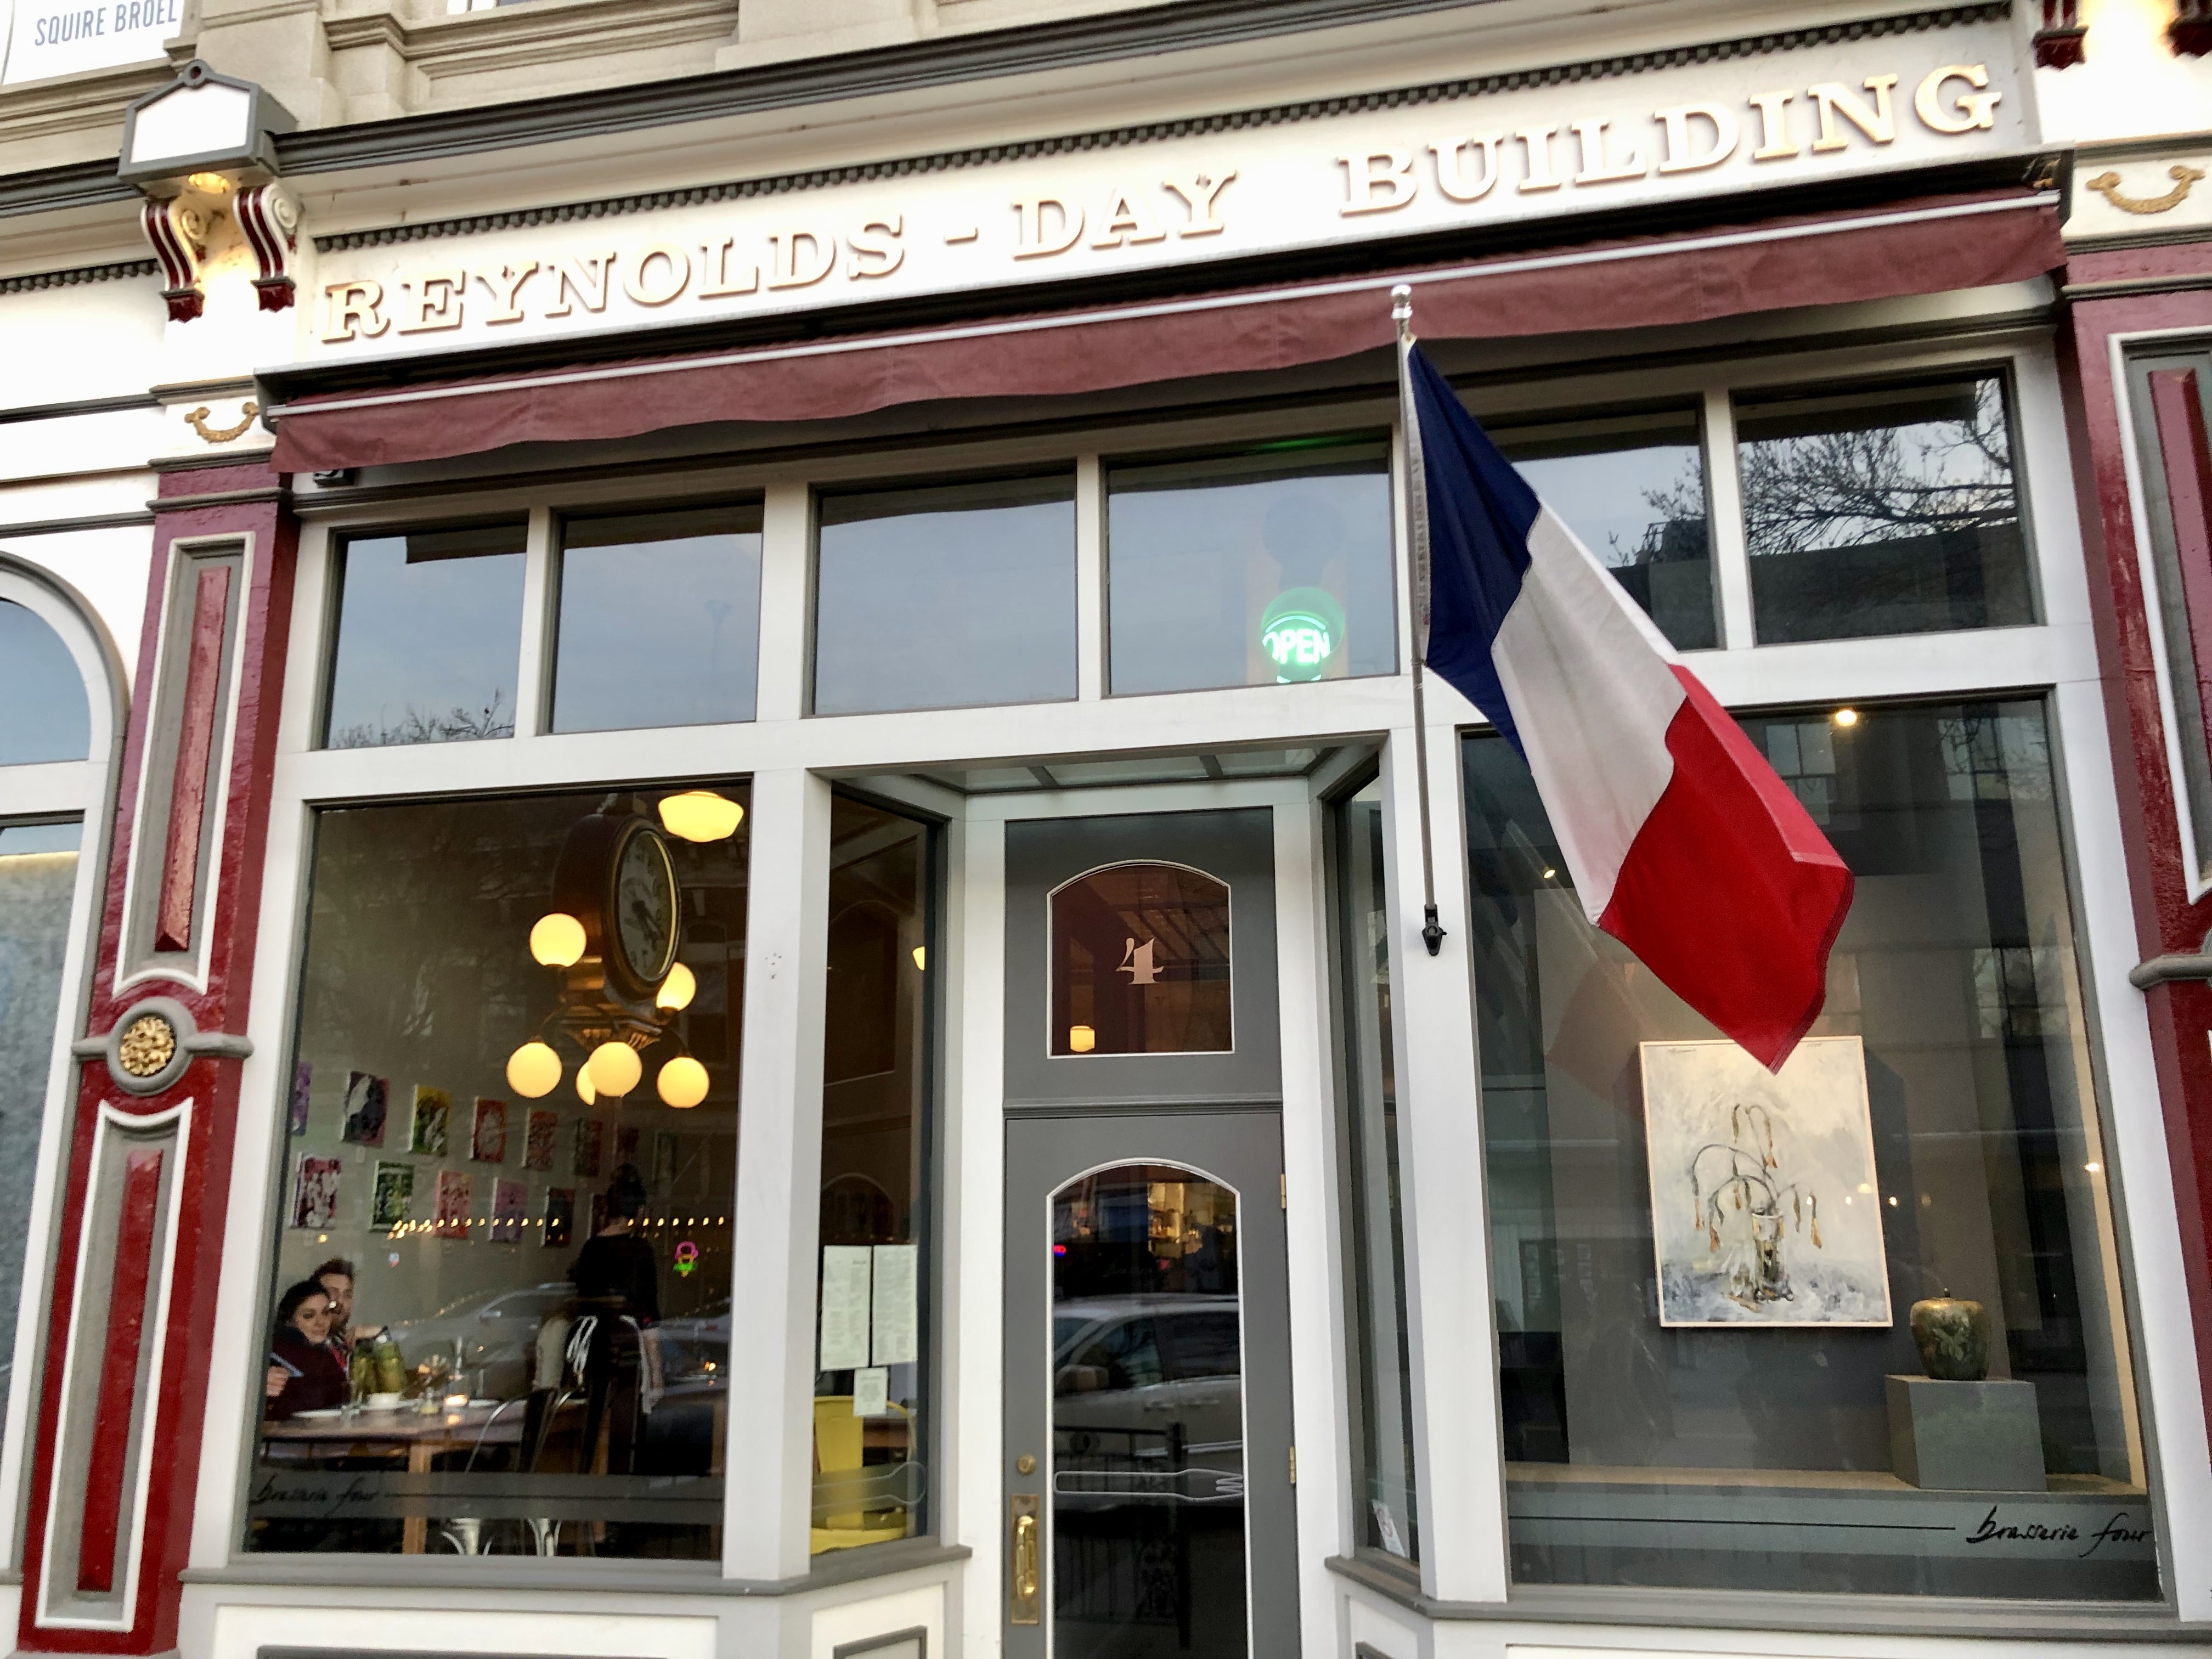 Brasserie Four Street View